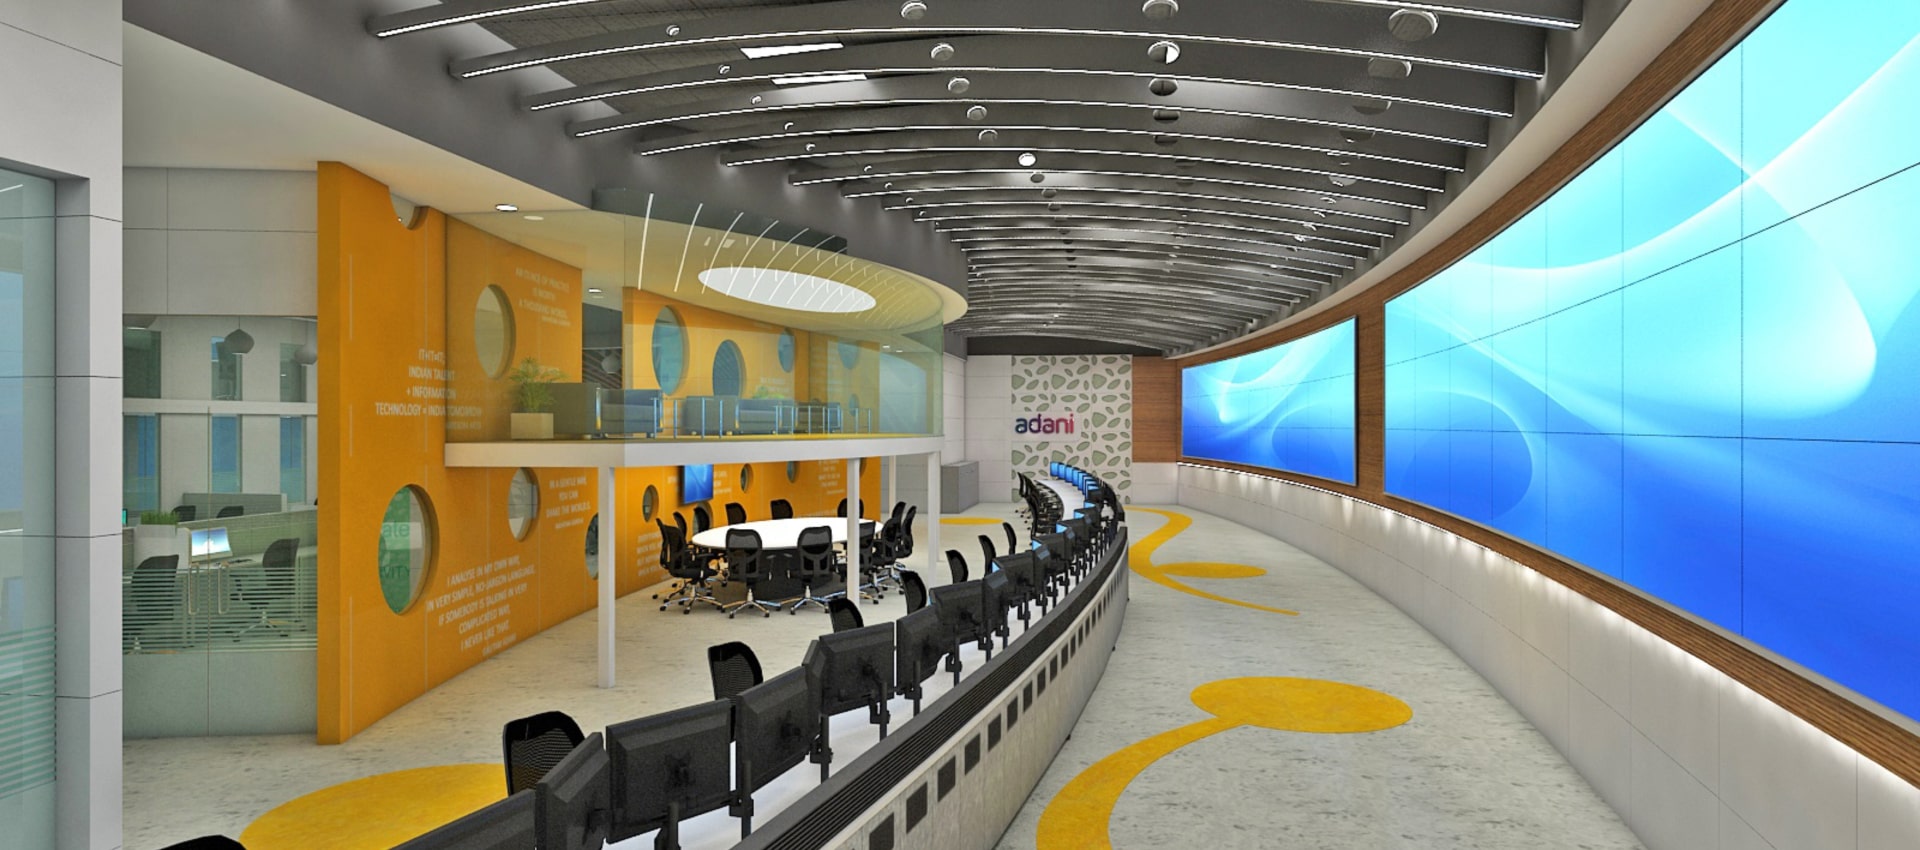 Adani Control room design